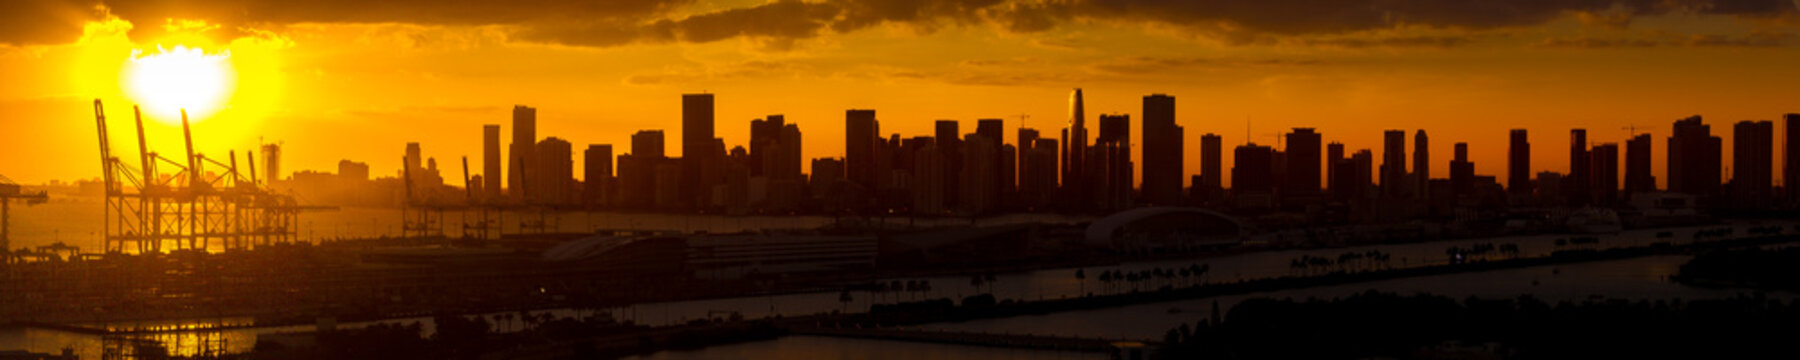 Miami downtown skyline silhouette against orange sunset sky 